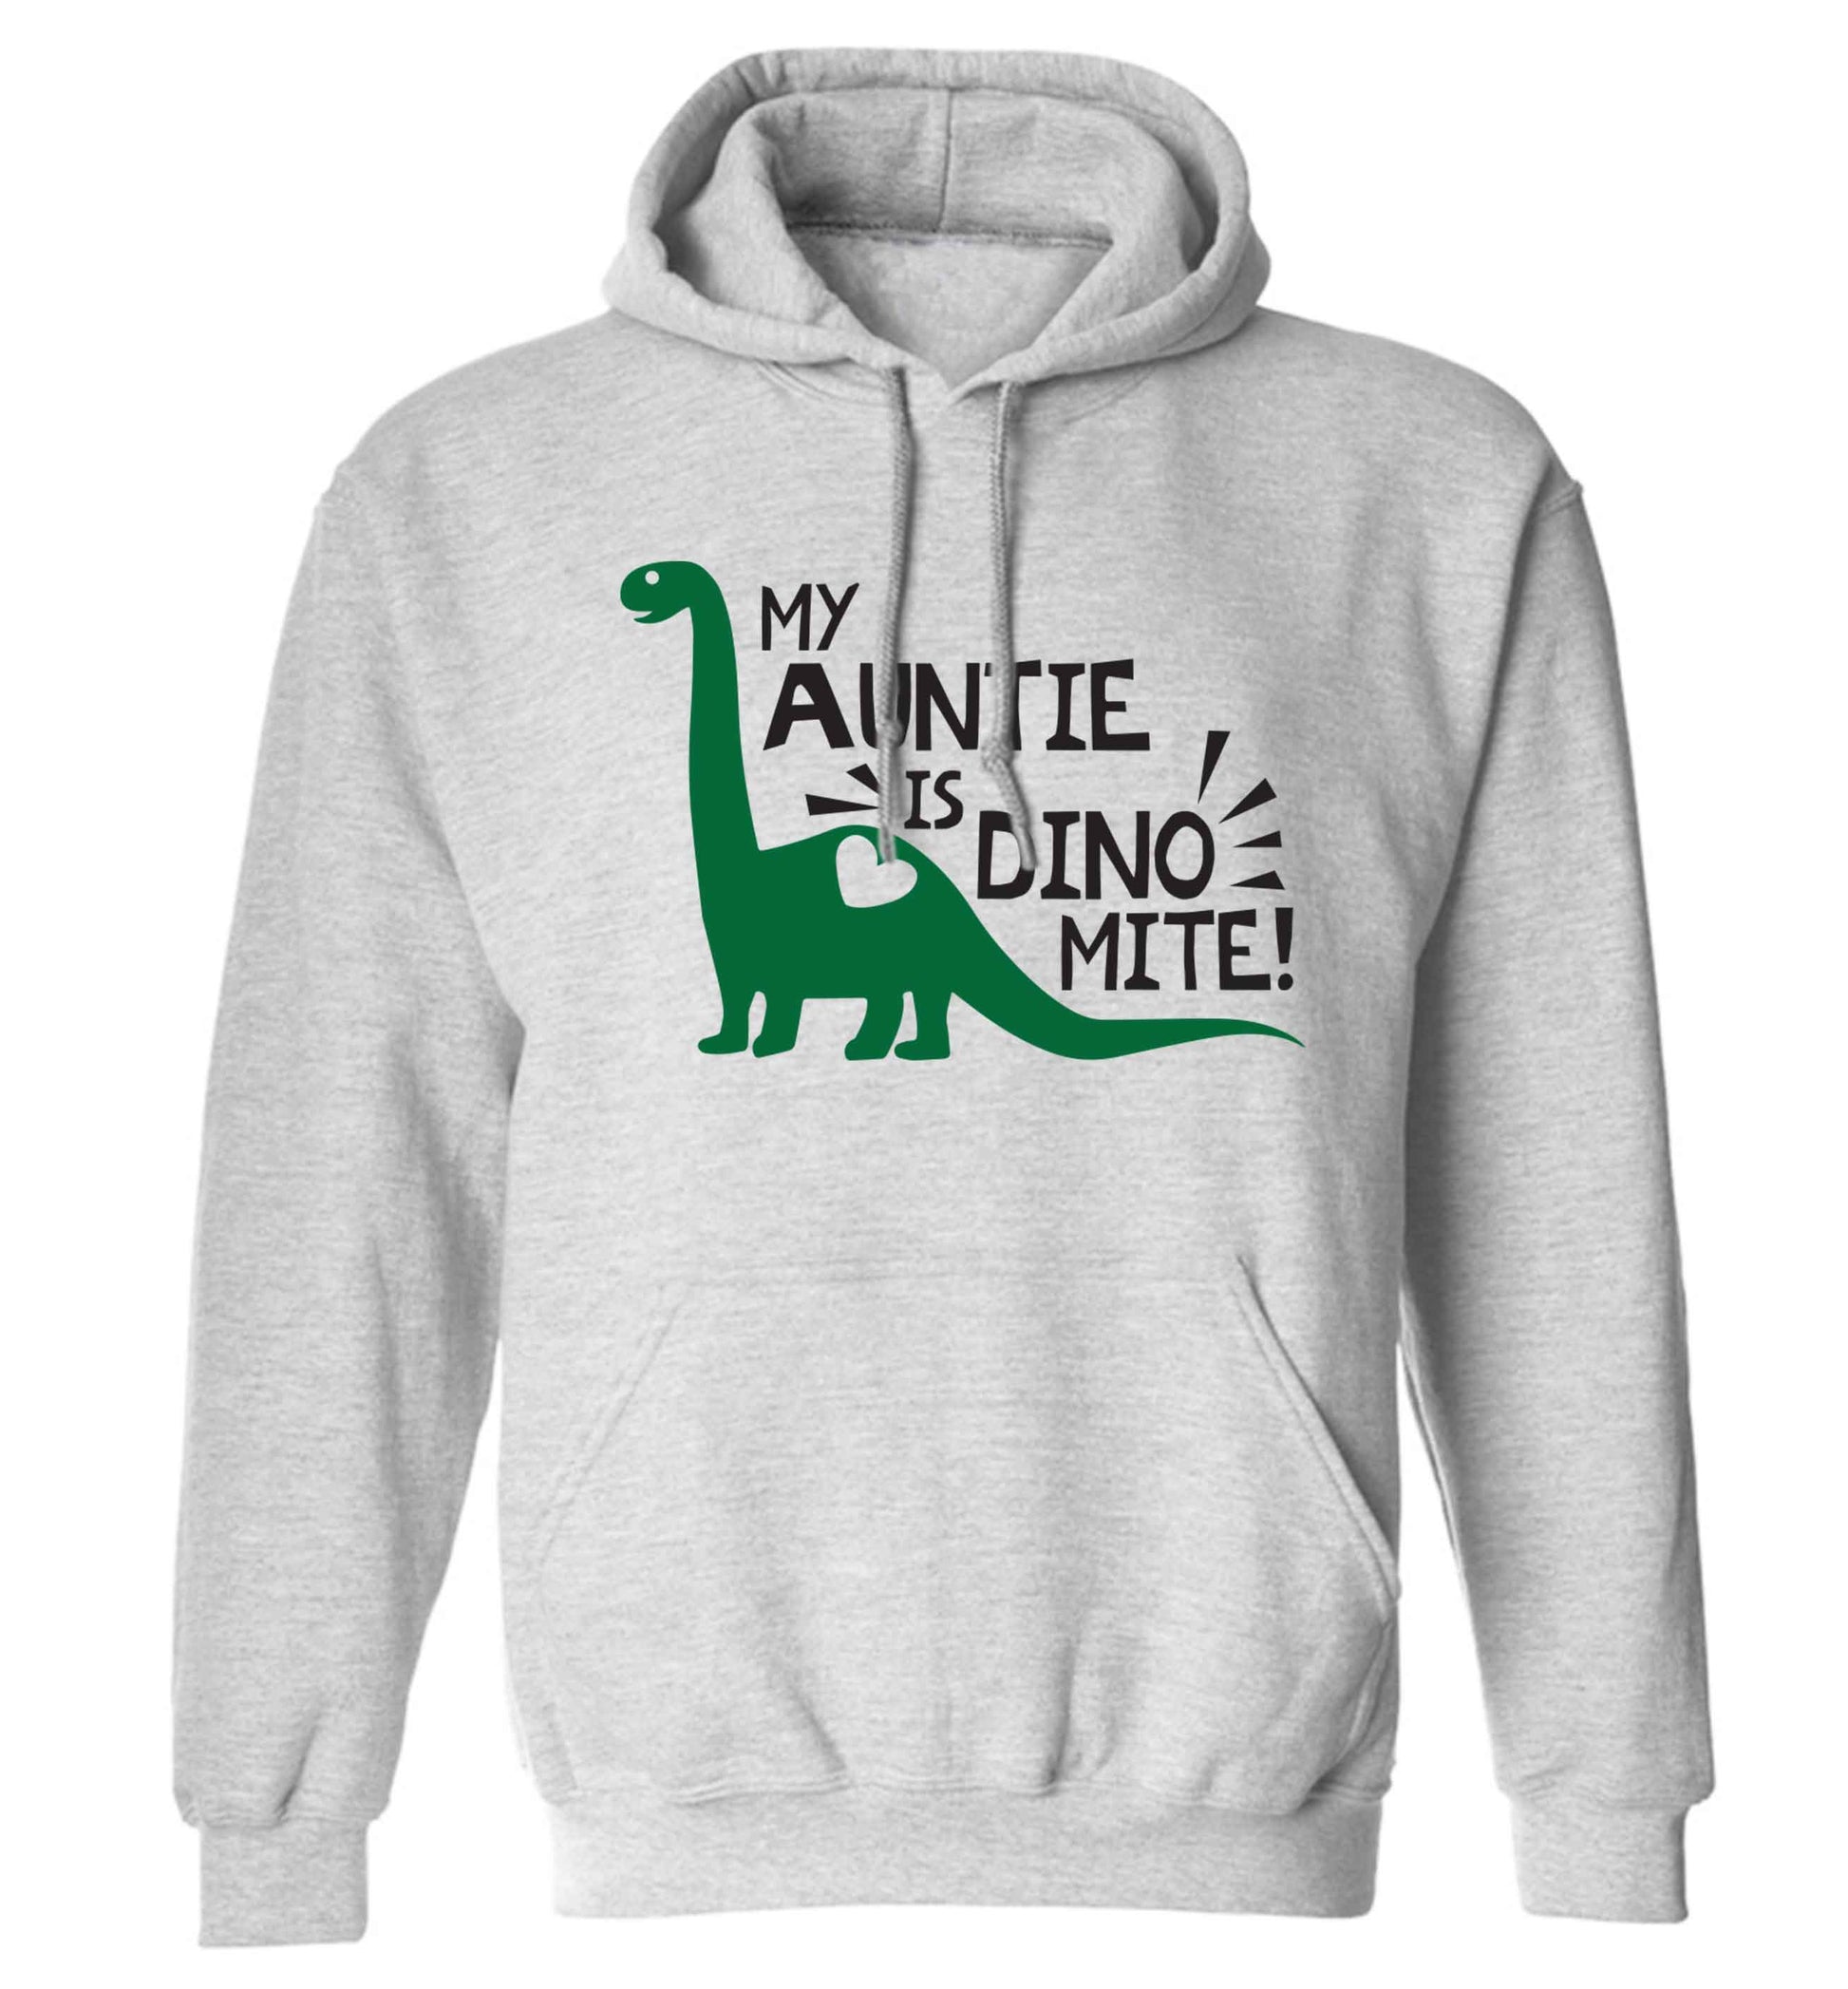 My auntie is dinomite! adults unisex grey hoodie 2XL